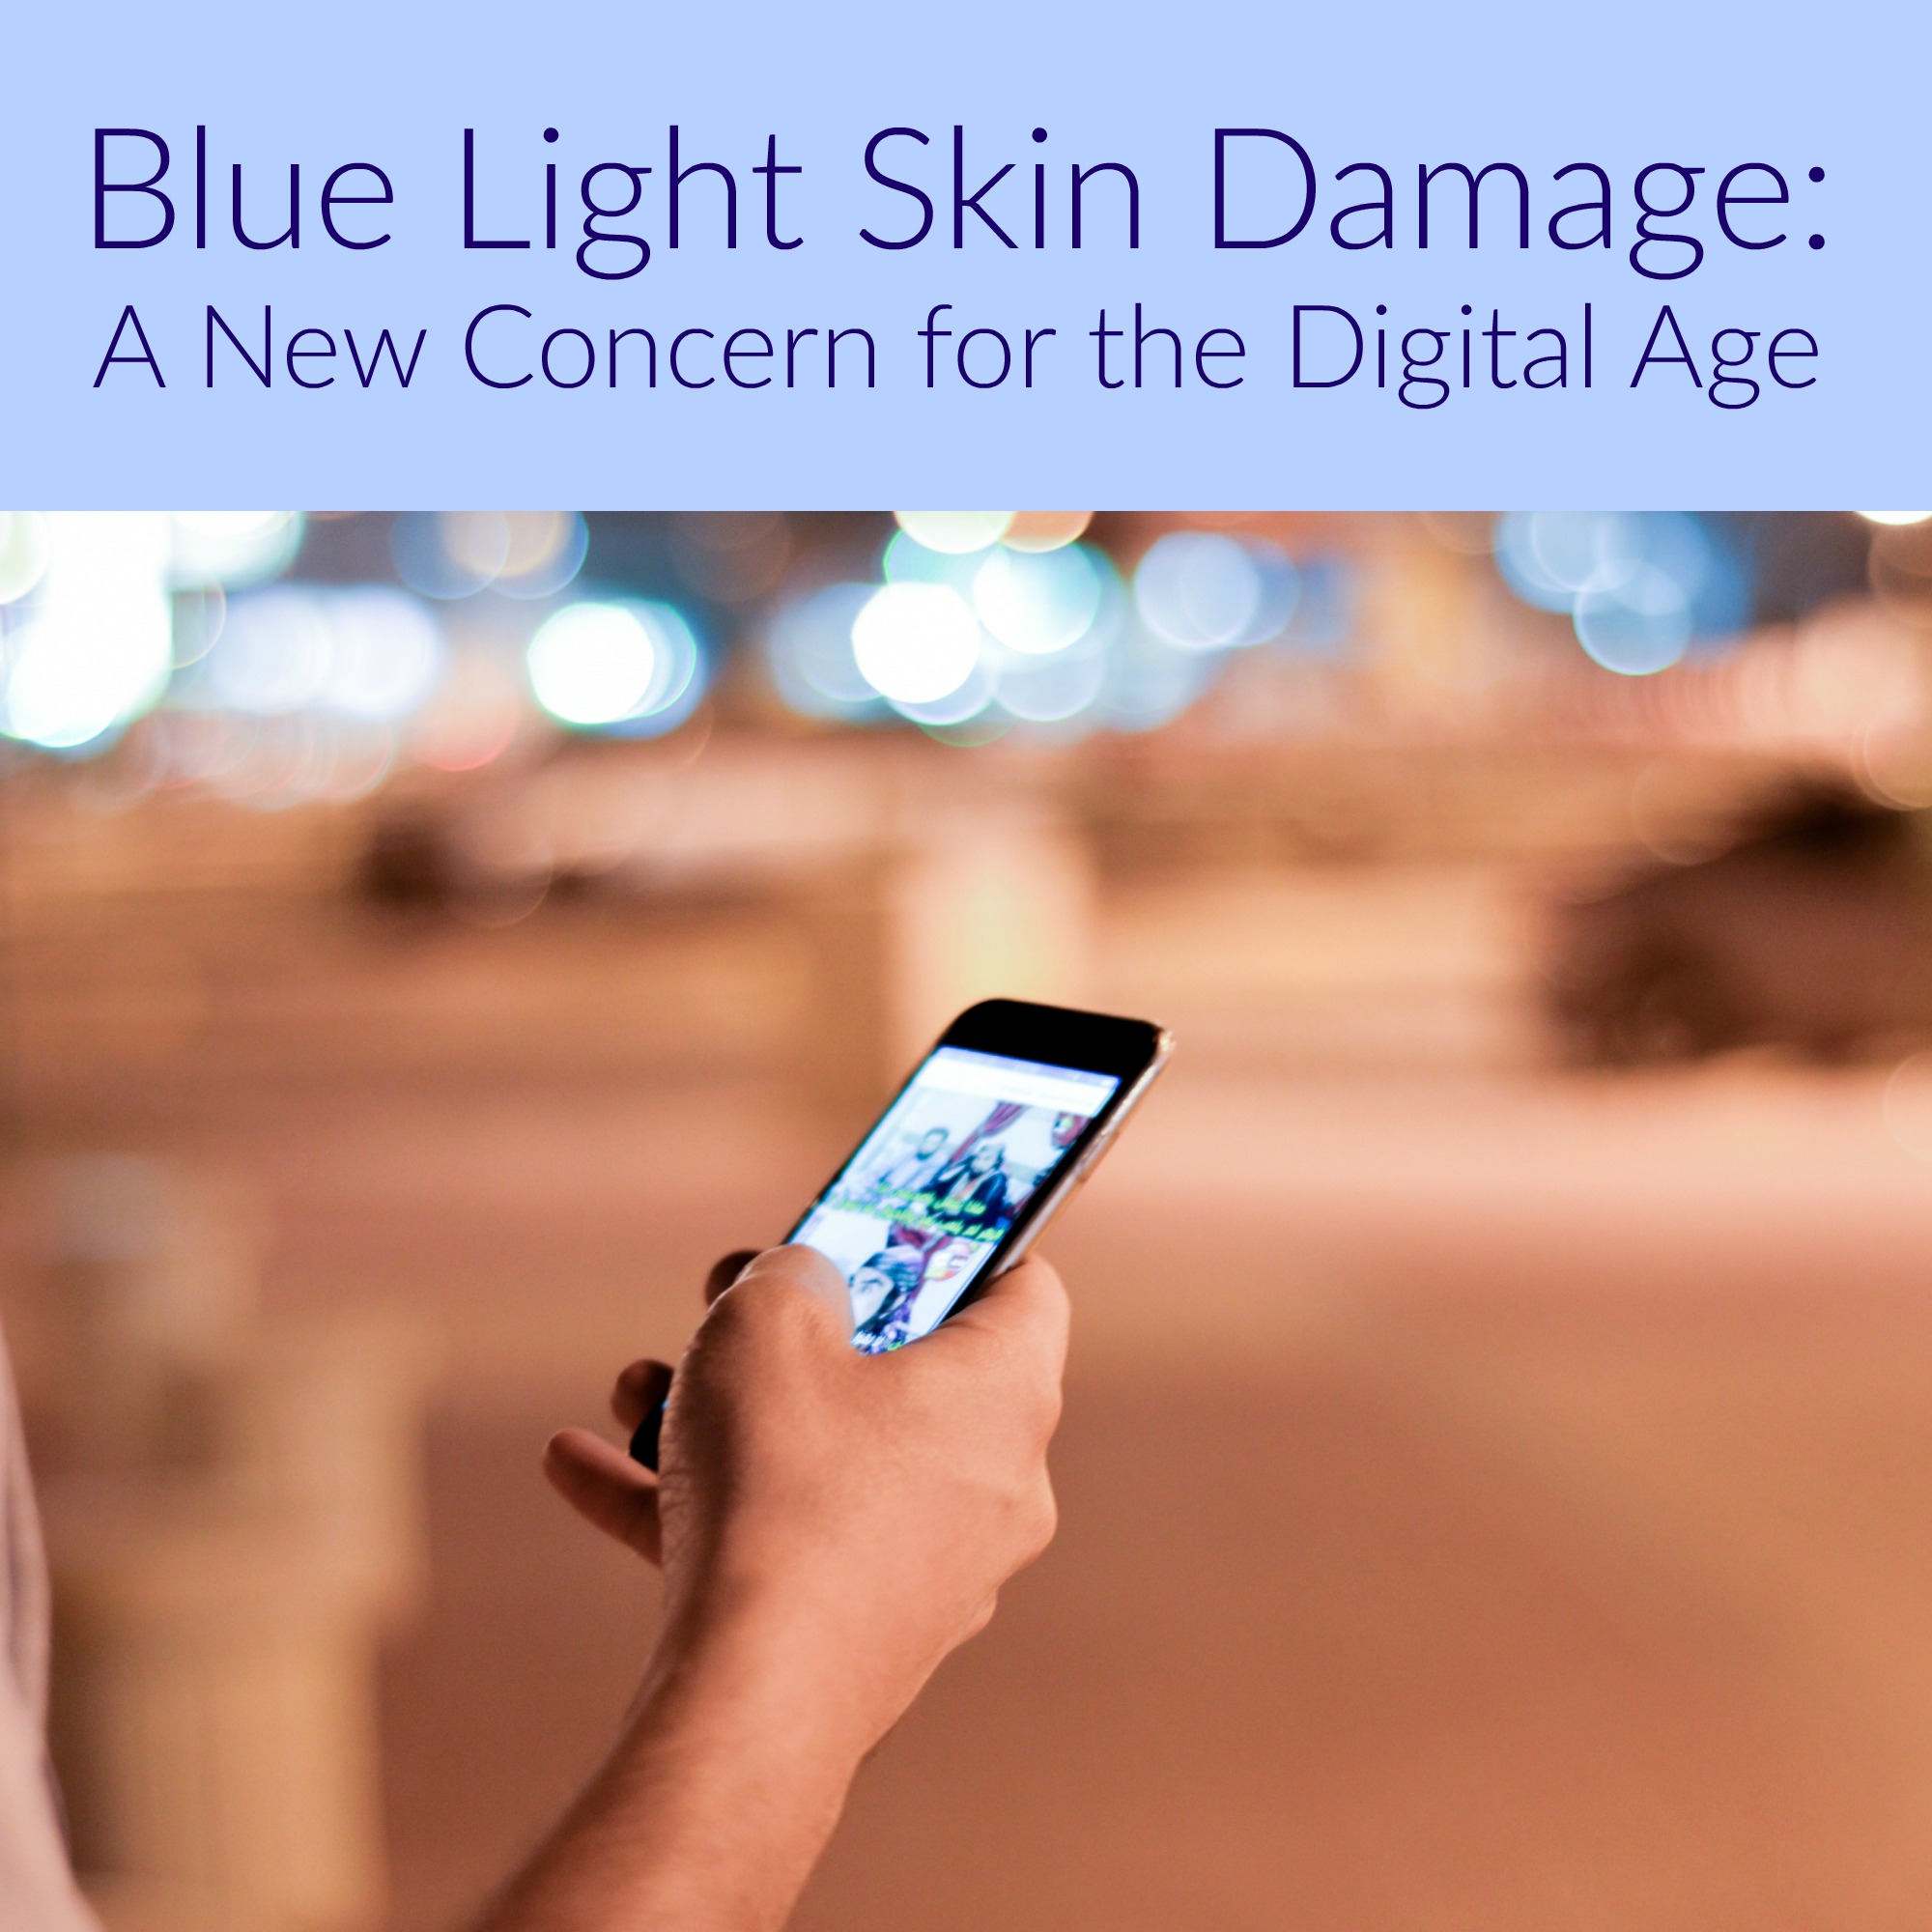 Blue Light Skin Damage - A New Concern for the Digital Age